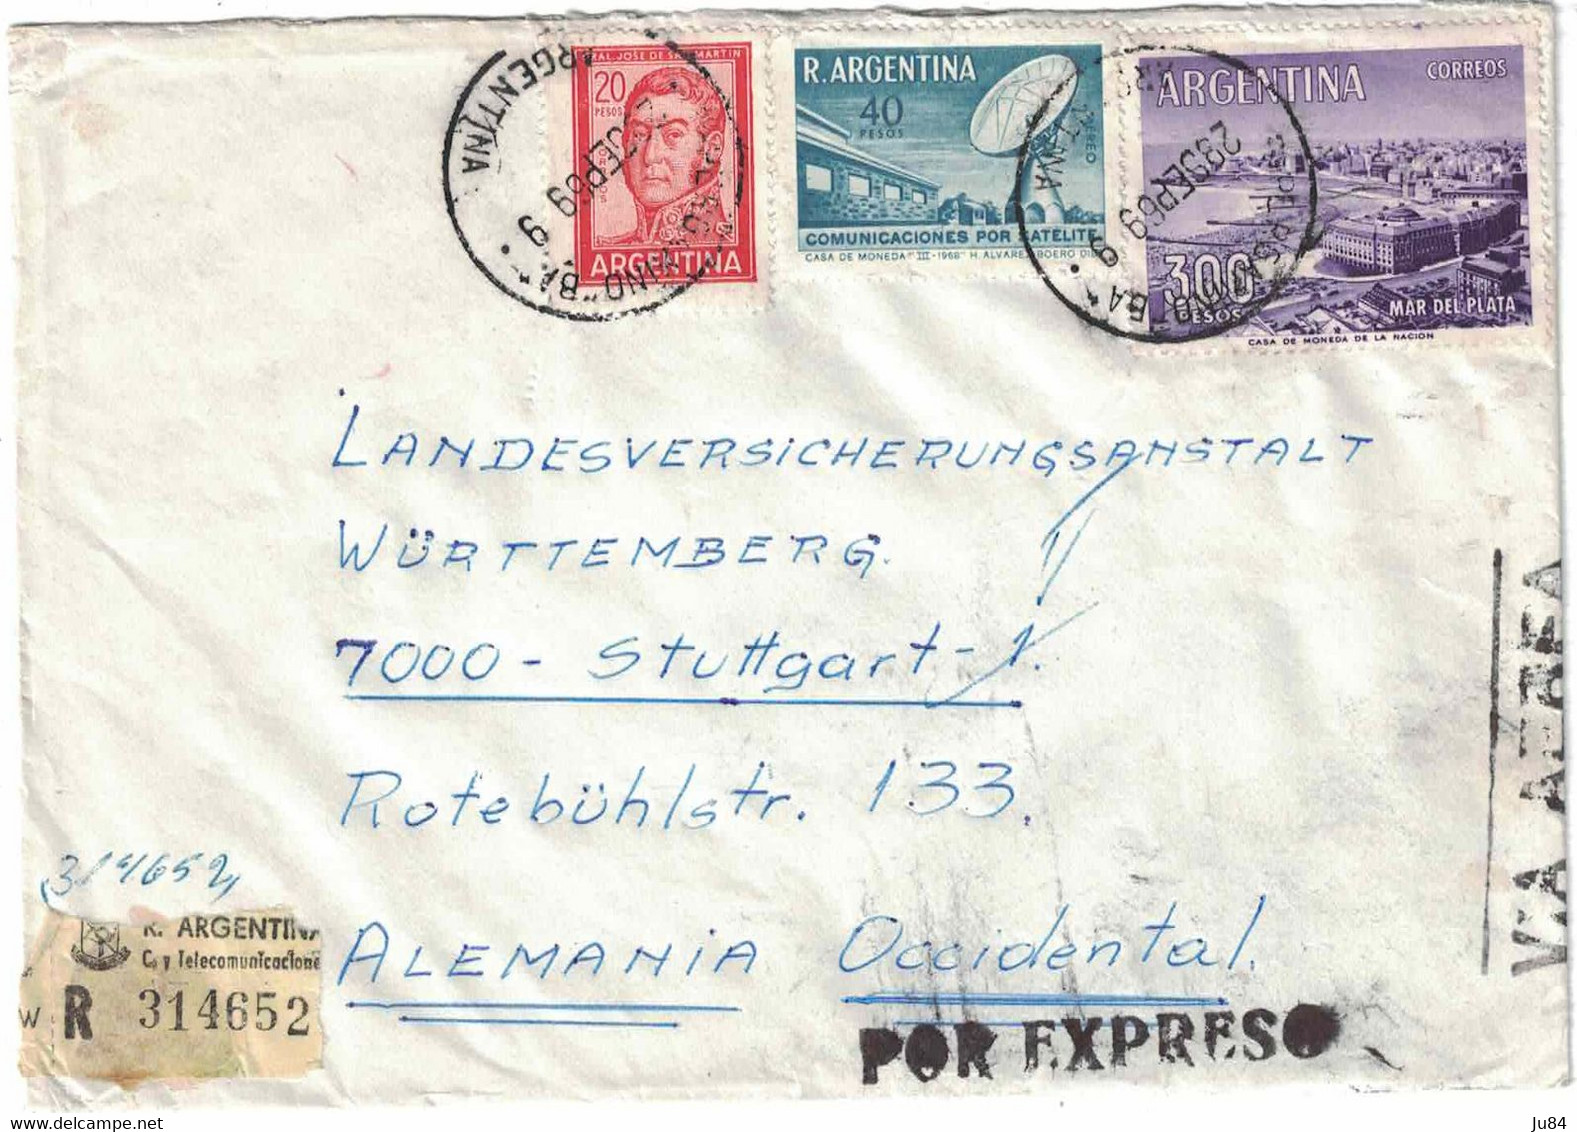 Argentine - Pergamino - Lettre Recommandée Express - Pour L'Allemagne - Stuttgart - 28 Septembre 1969 - Used Stamps